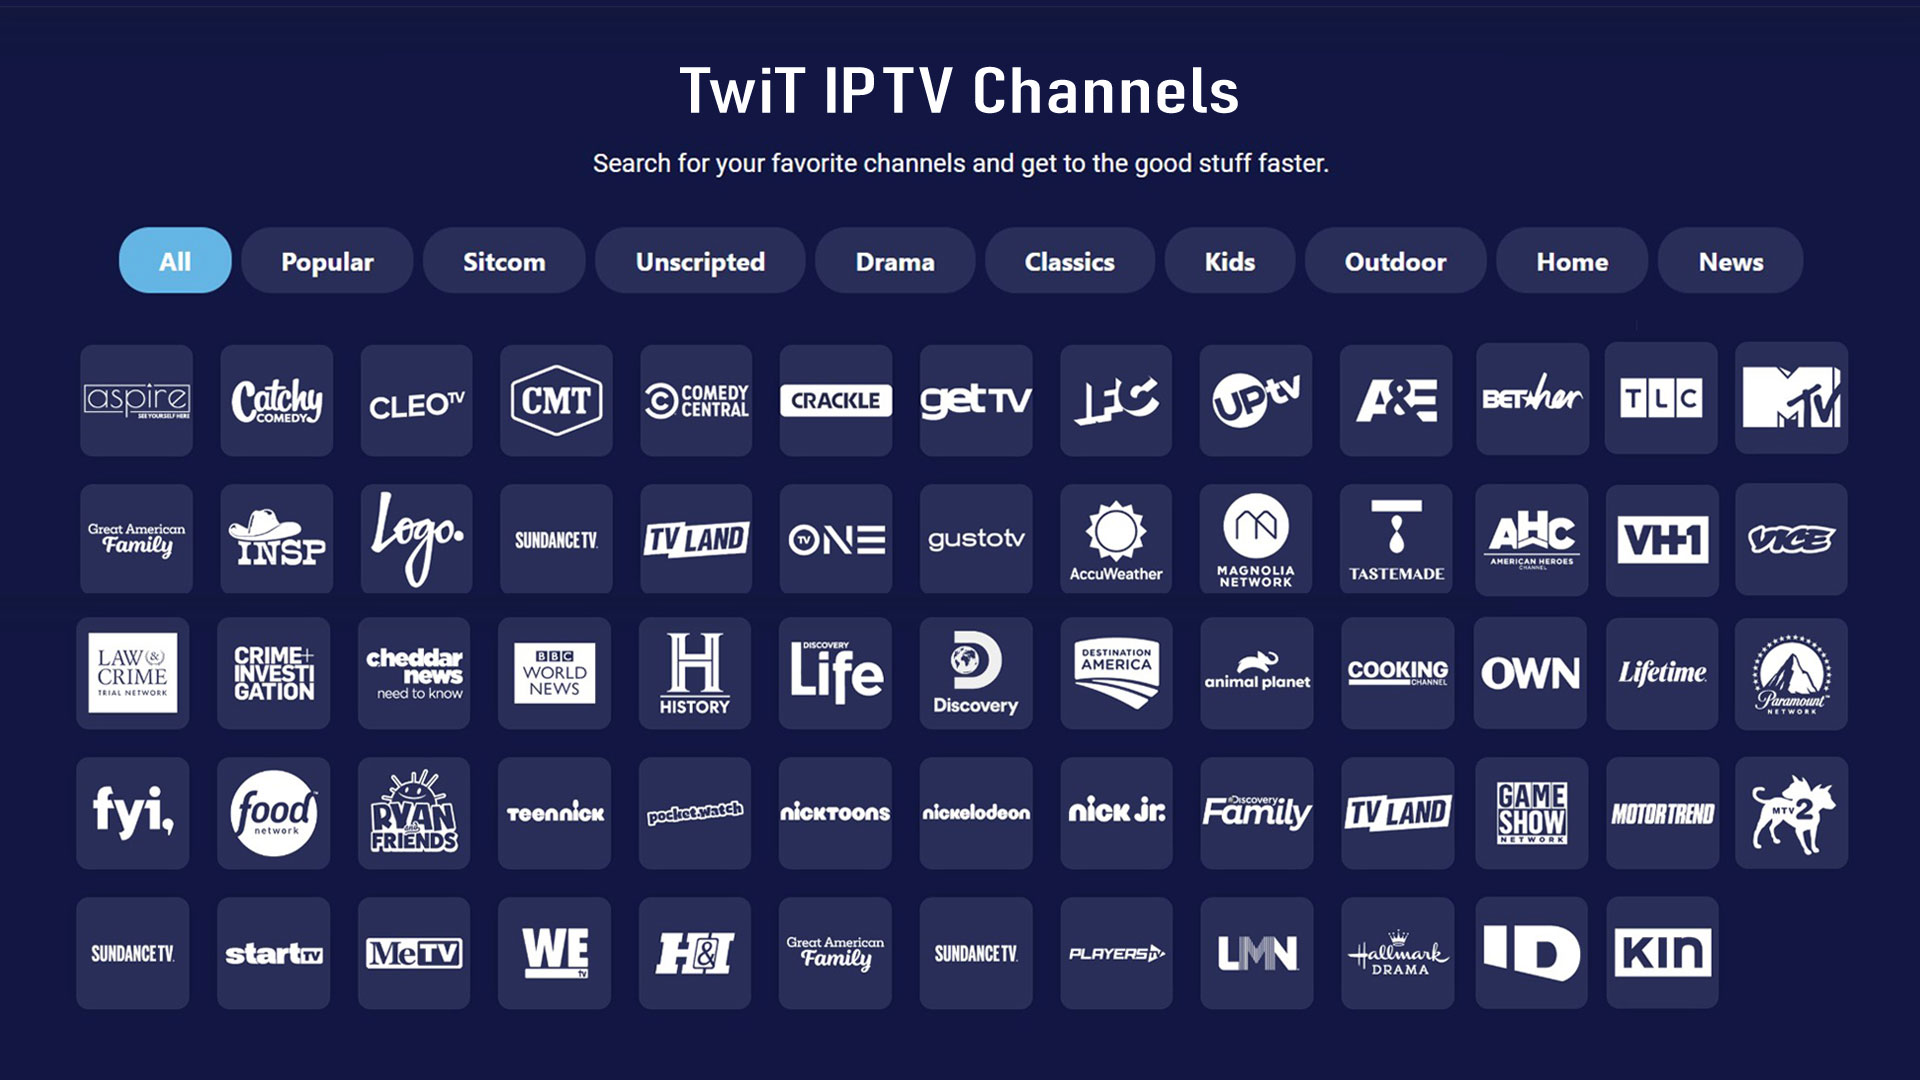 Twit IPTV channels